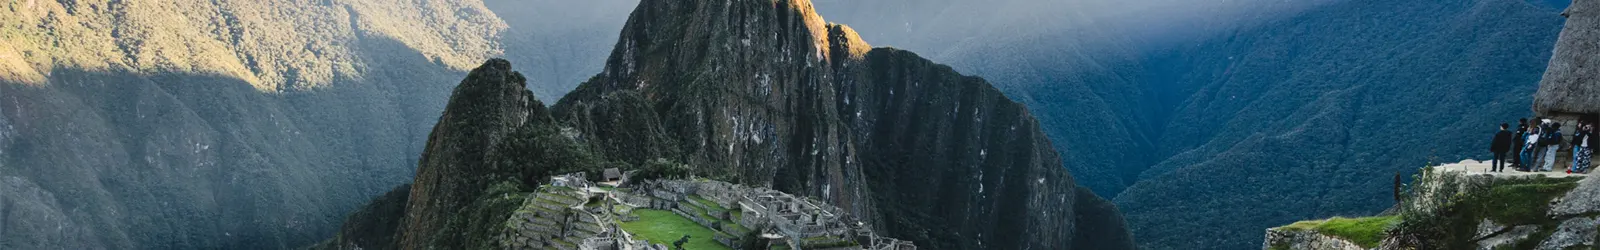 Short Inca Trail to Machu picchu 1 Day